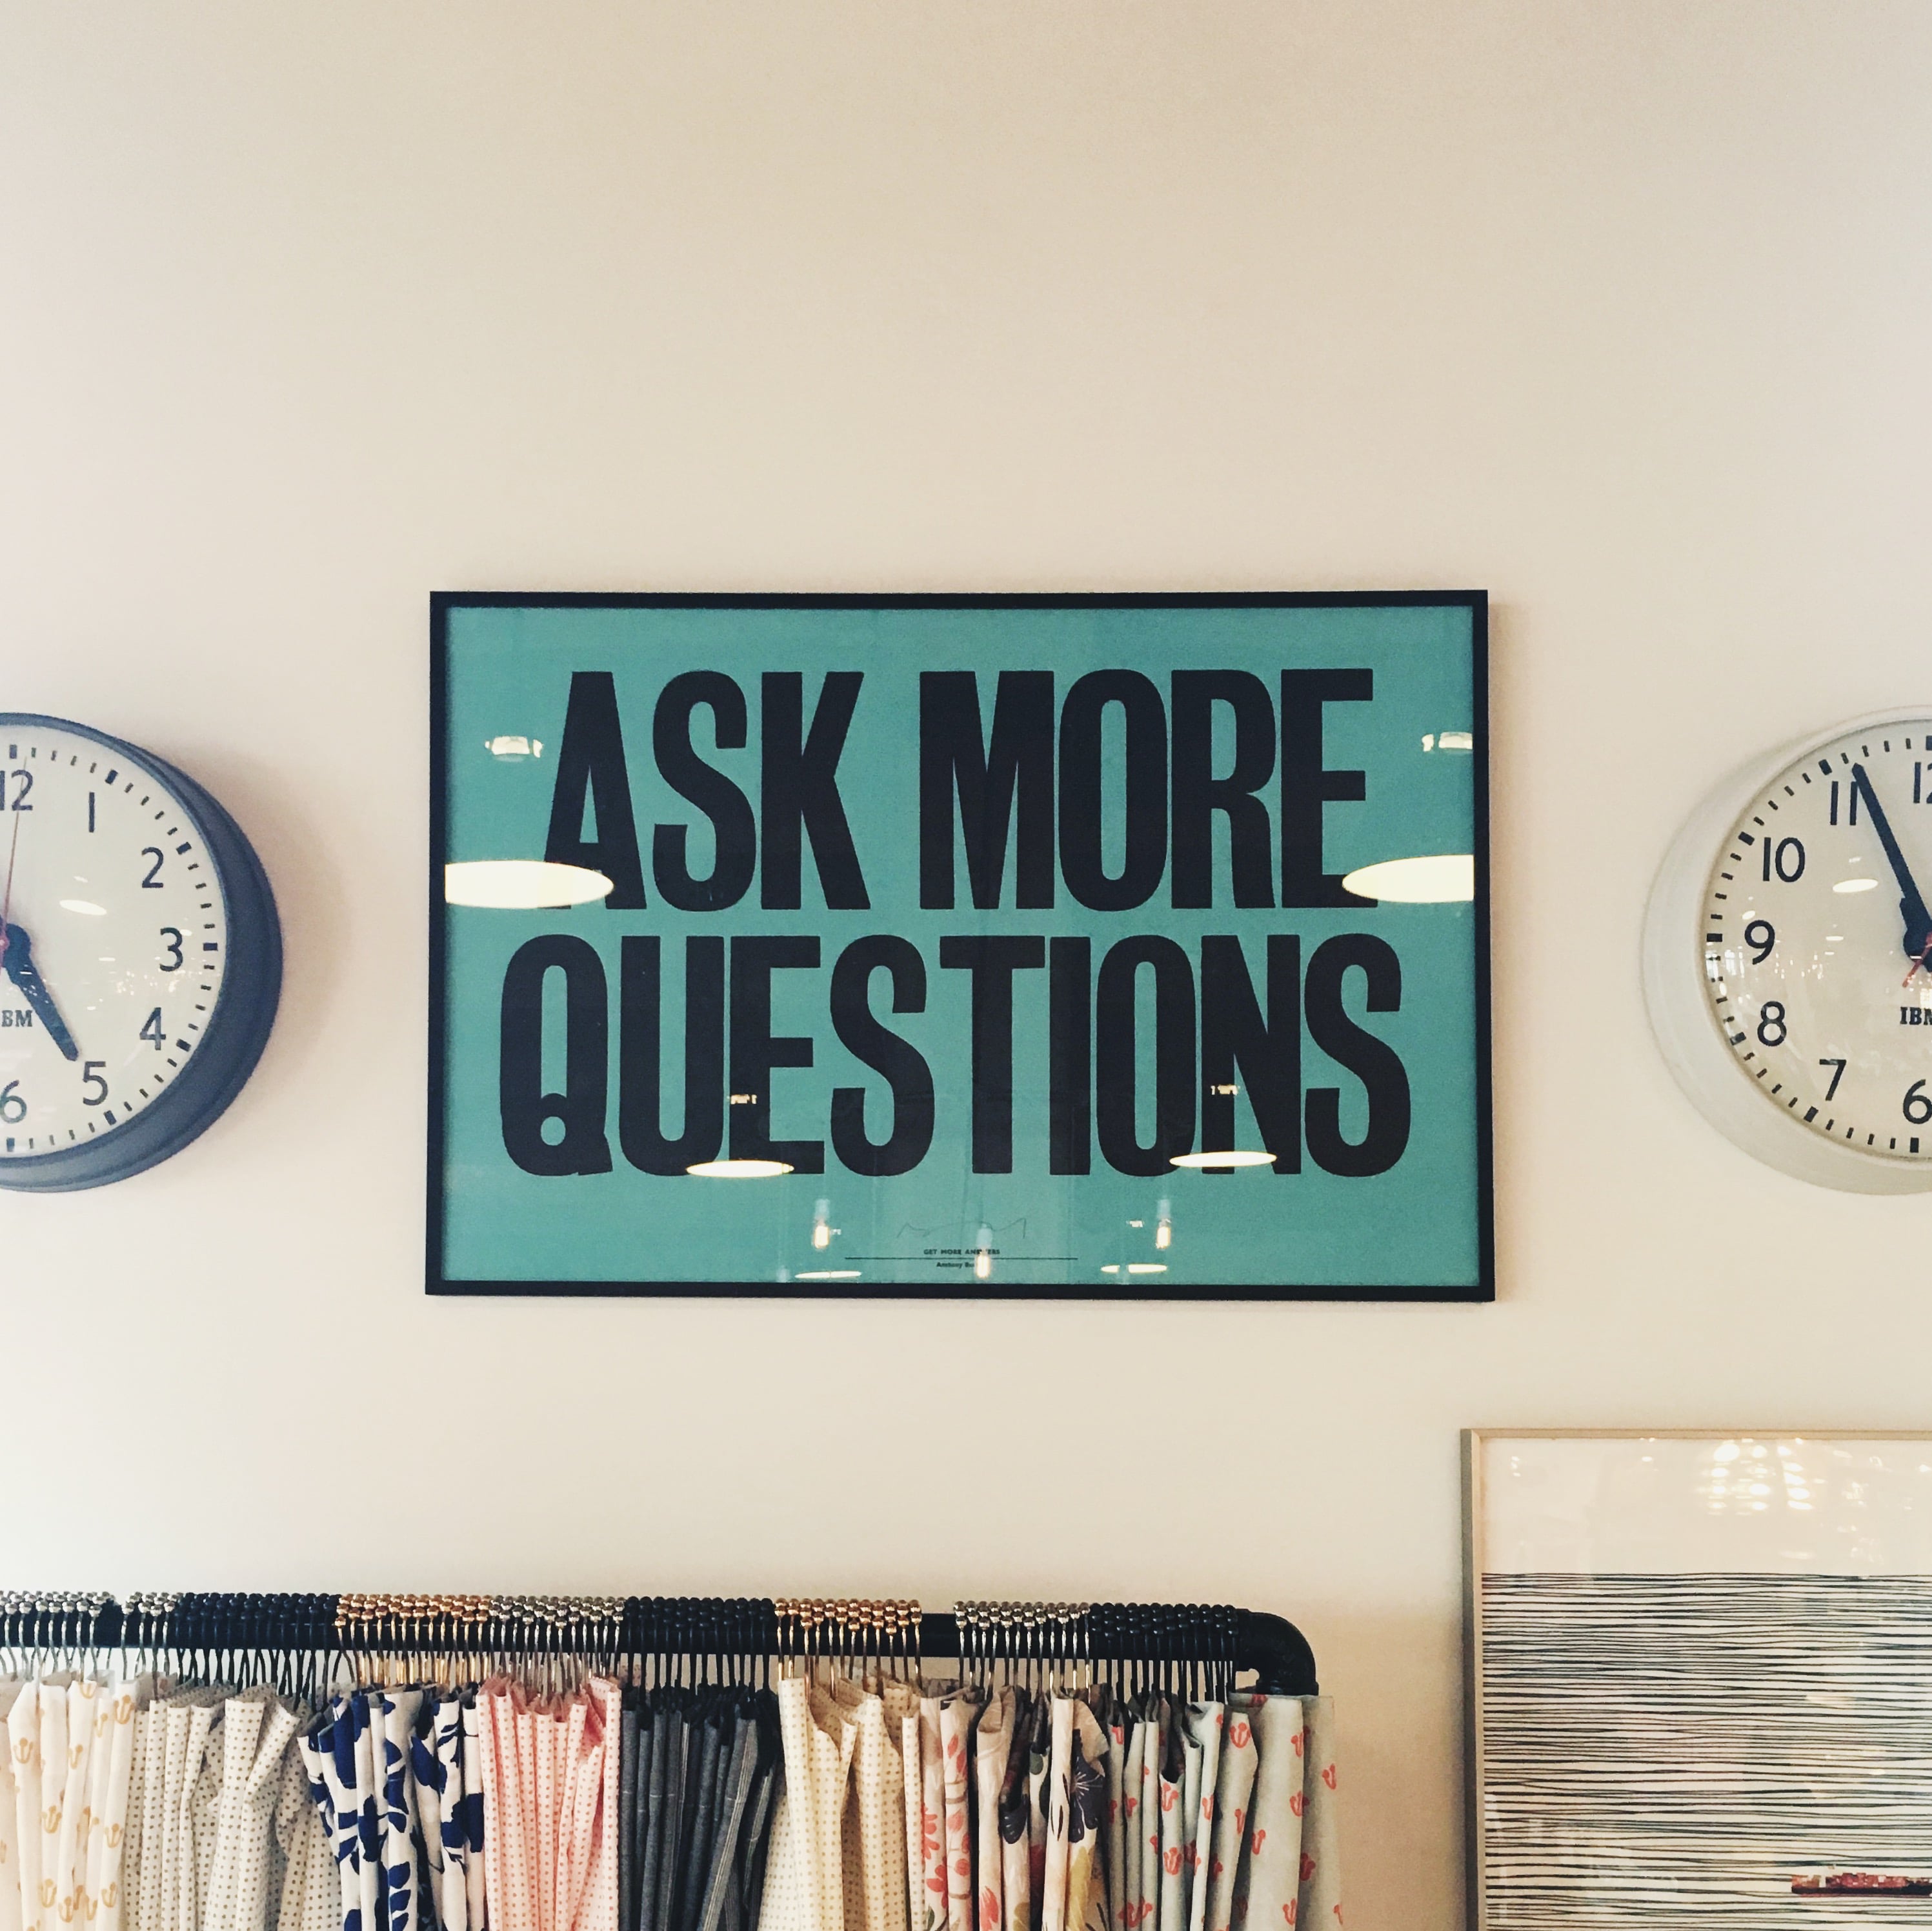 &quot;Ask more questions&quot;